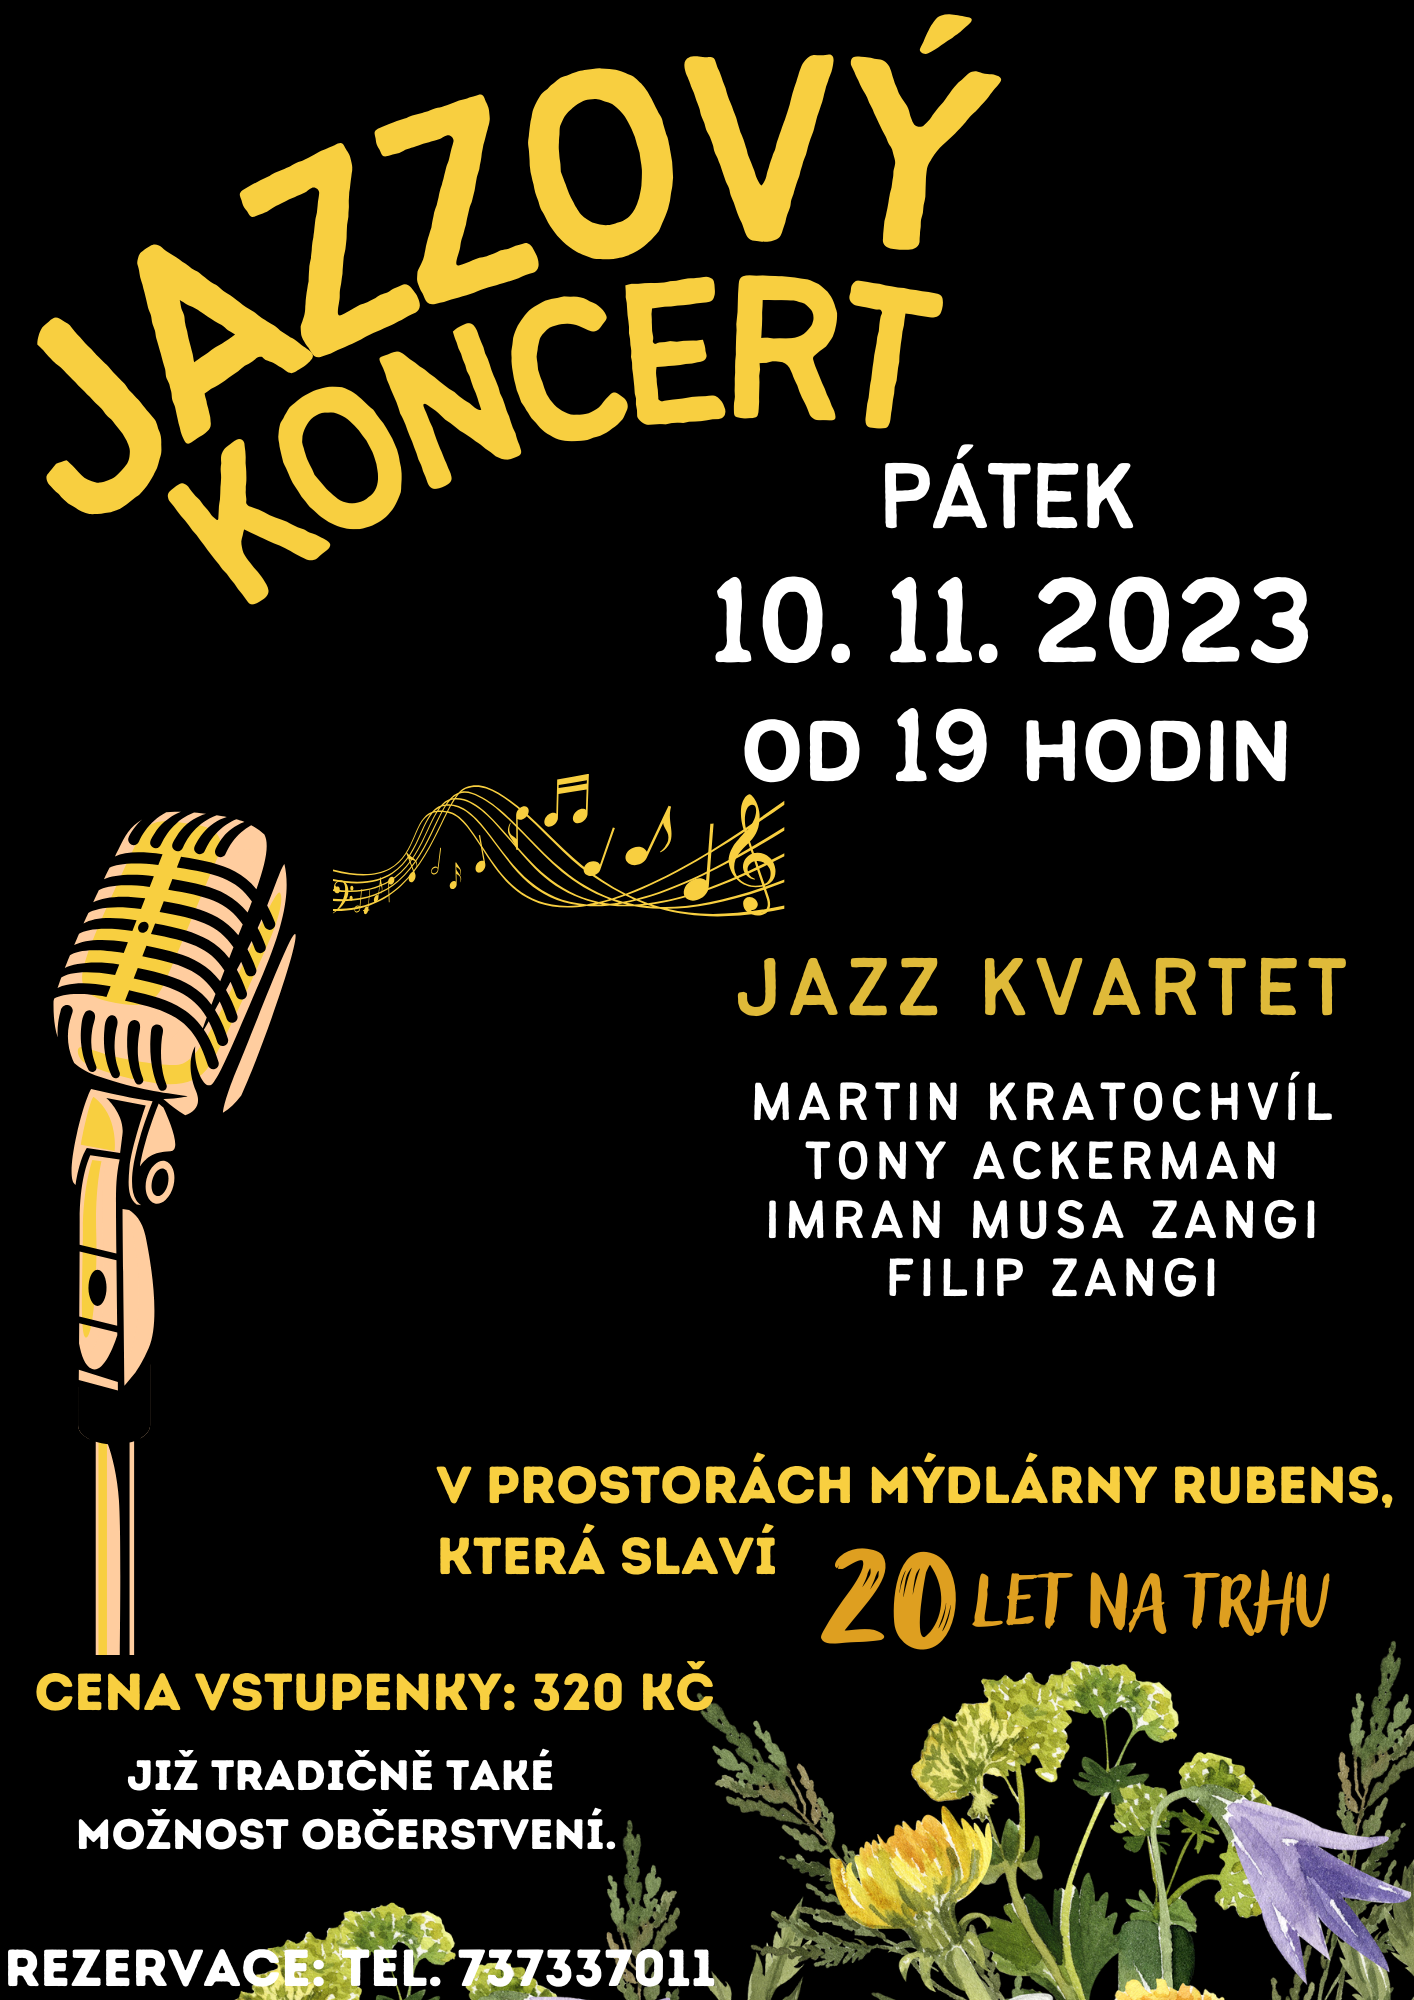 Jazzov koncert 2023 3